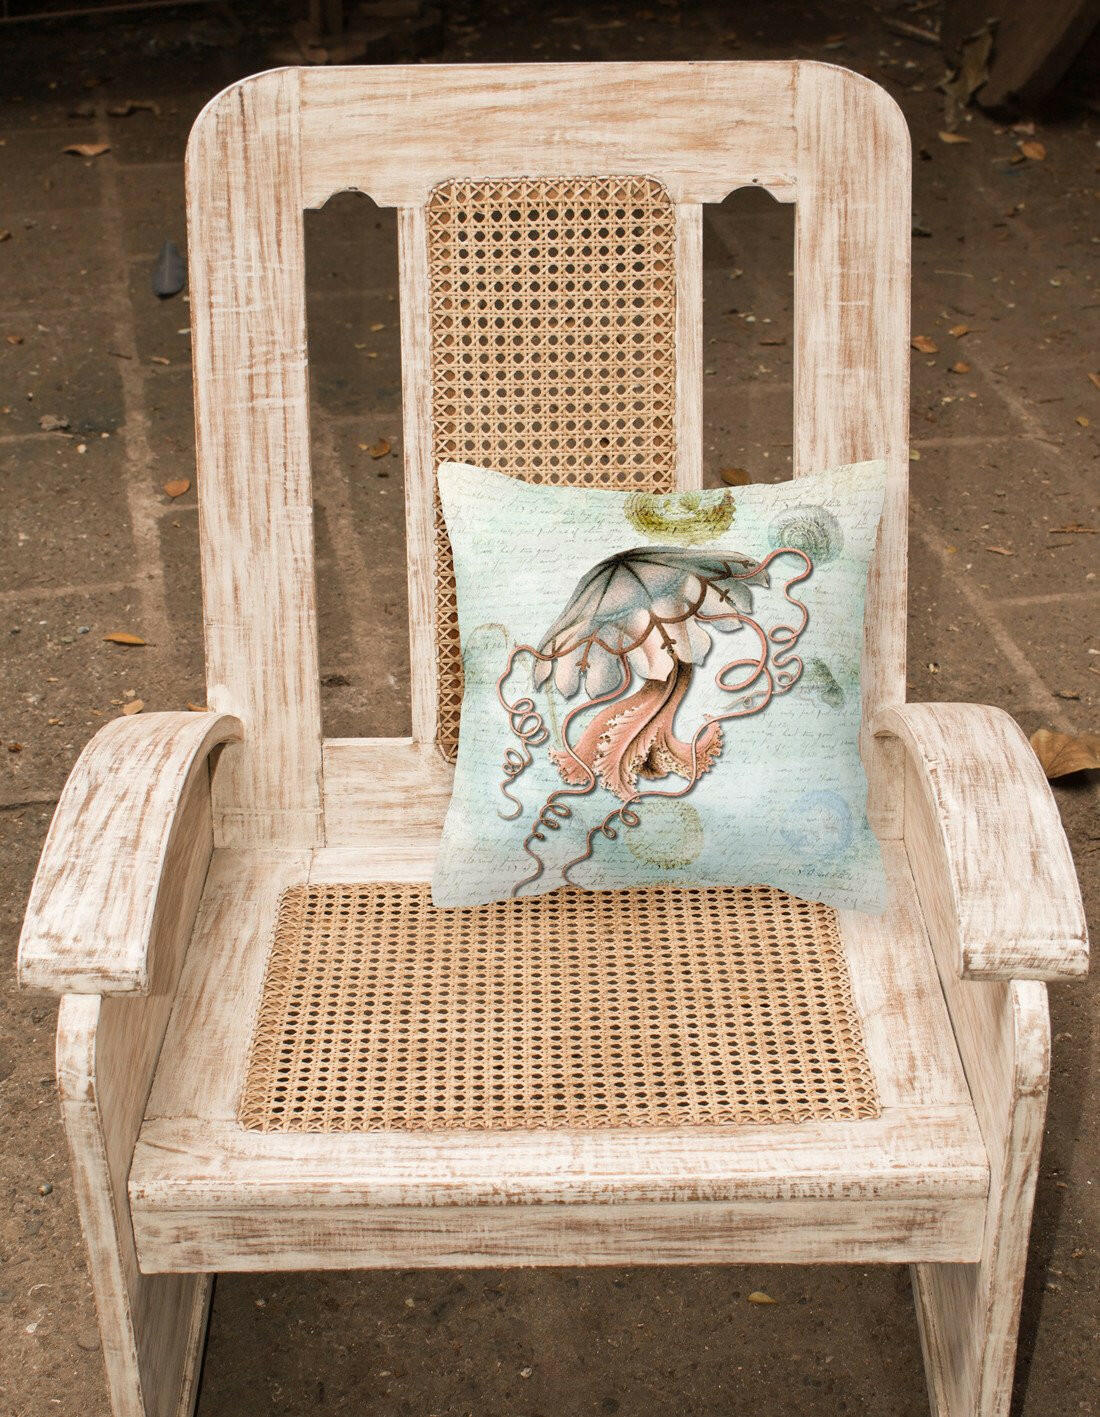 Jellyfish    Canvas Fabric Decorative Pillow by Caroline's Treasures